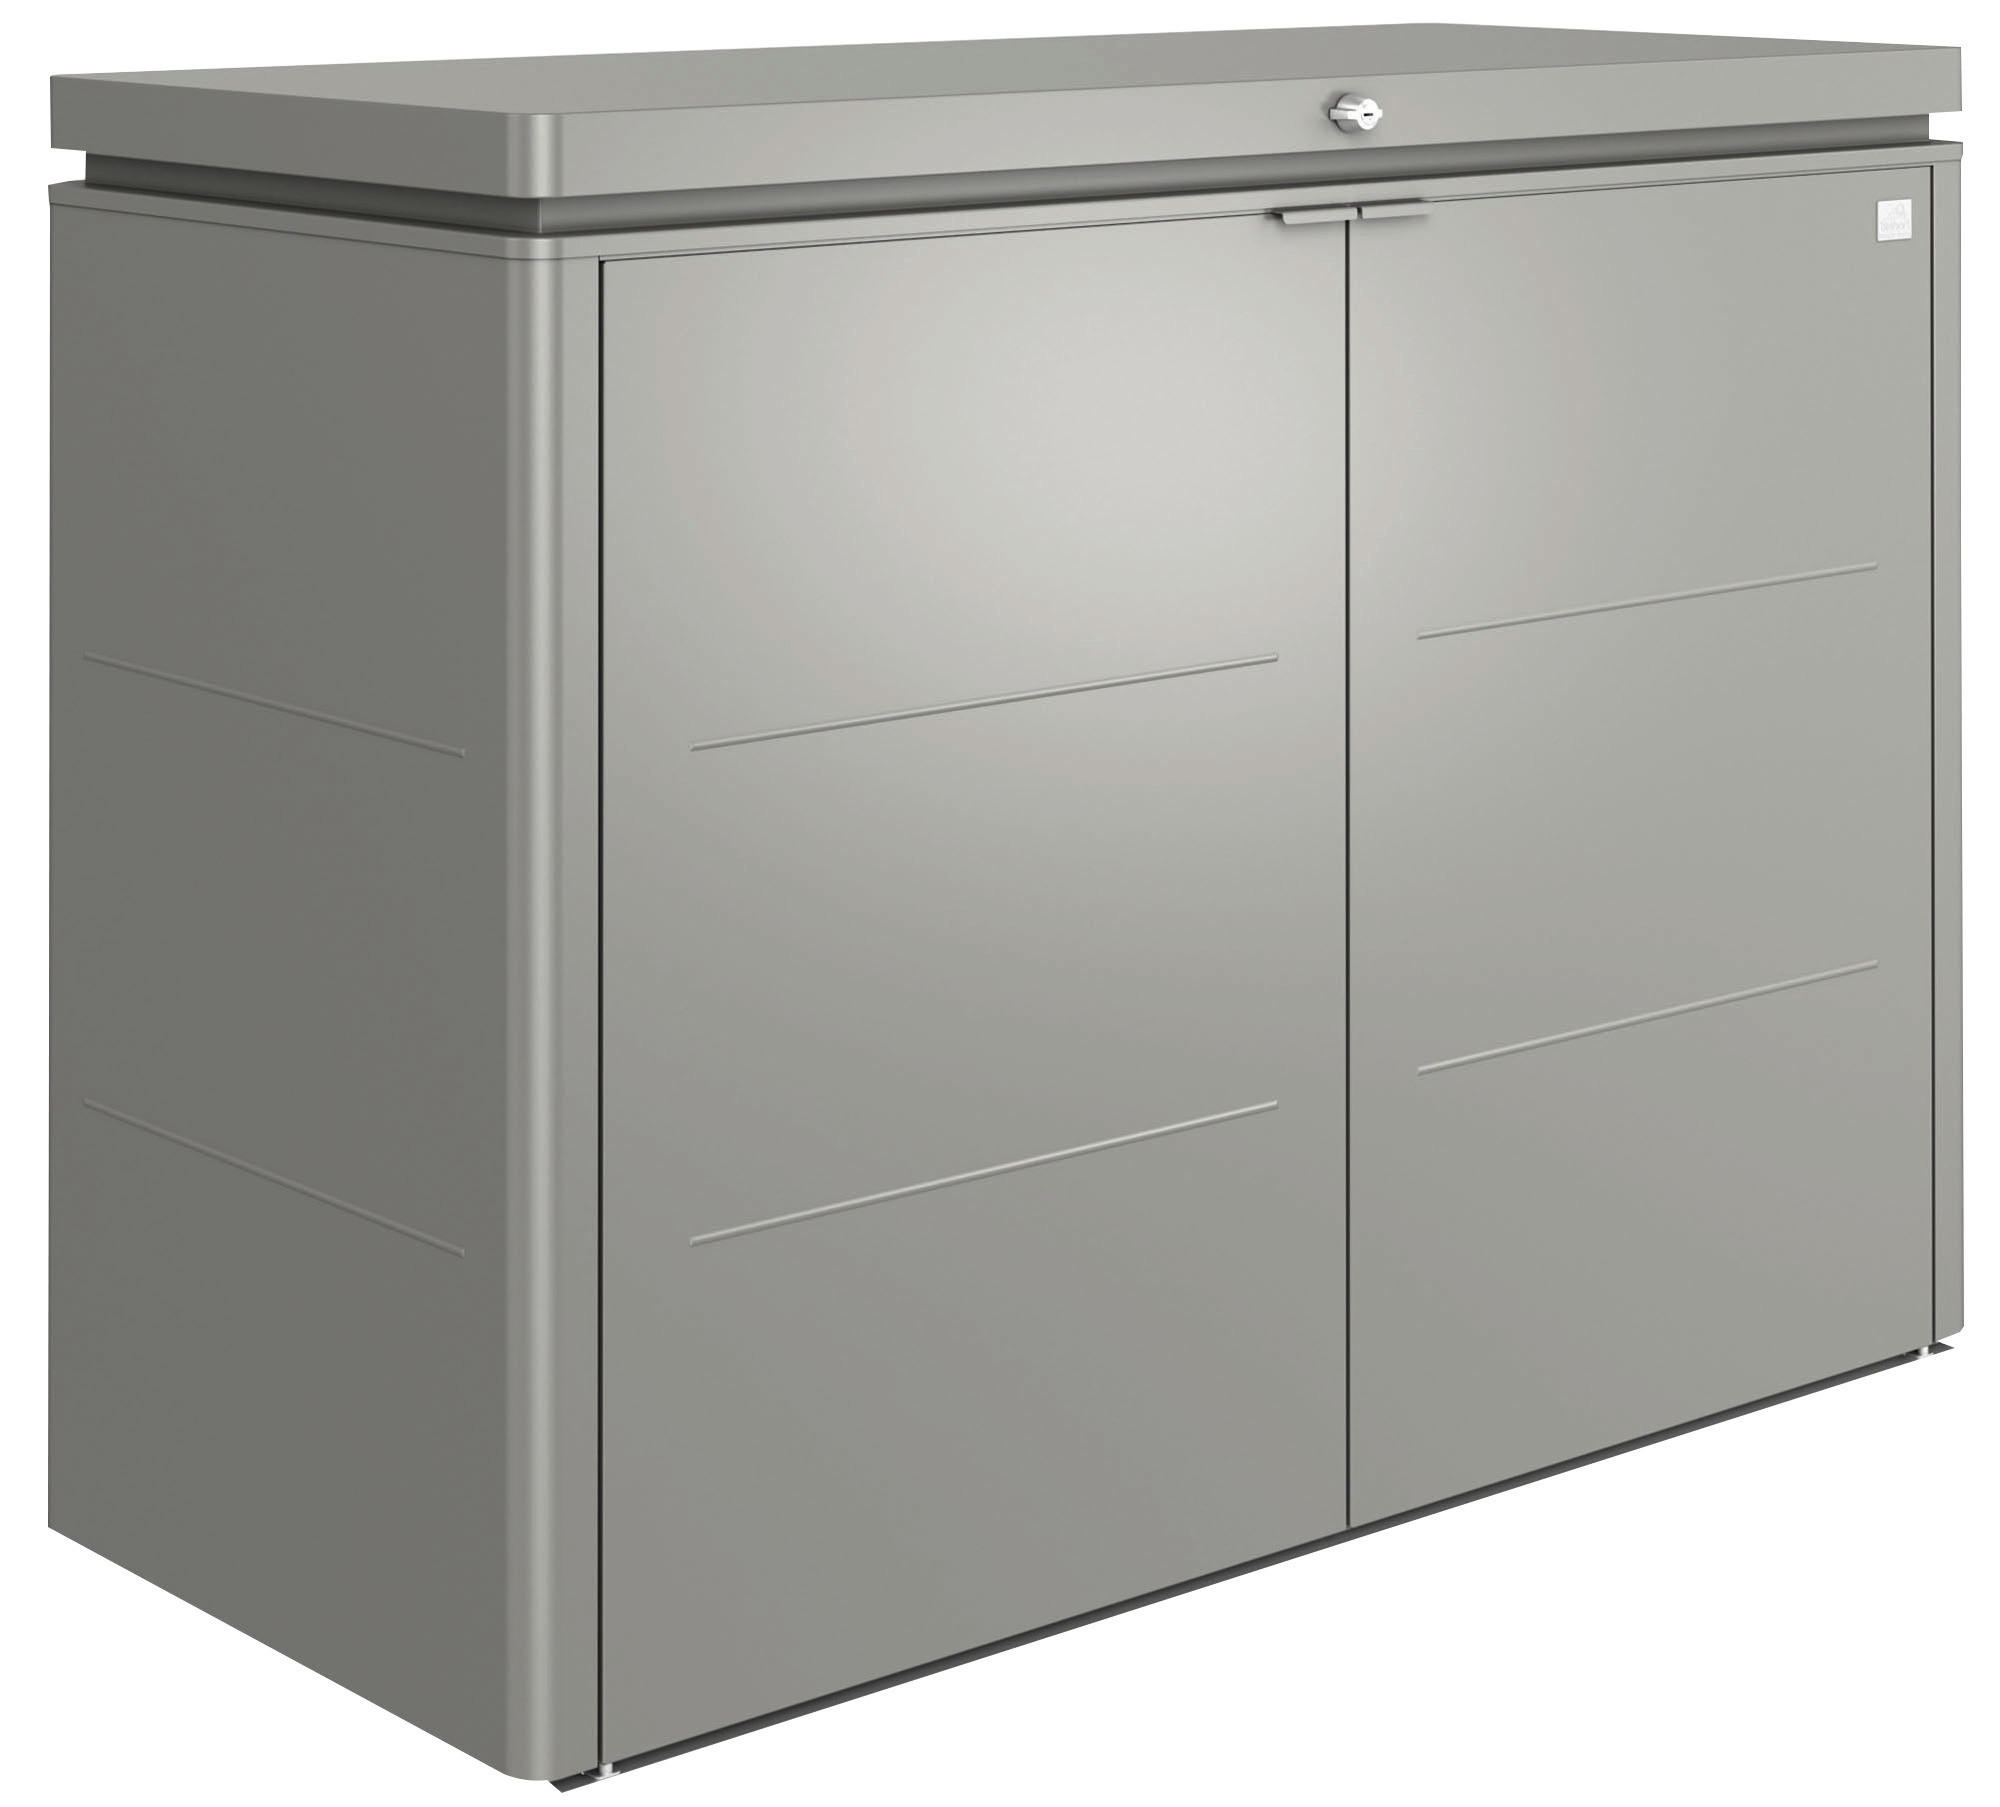 GARTENBOX 160/118/70 cm  - Grau, Design, Metall (160/118/70cm) - Biohort